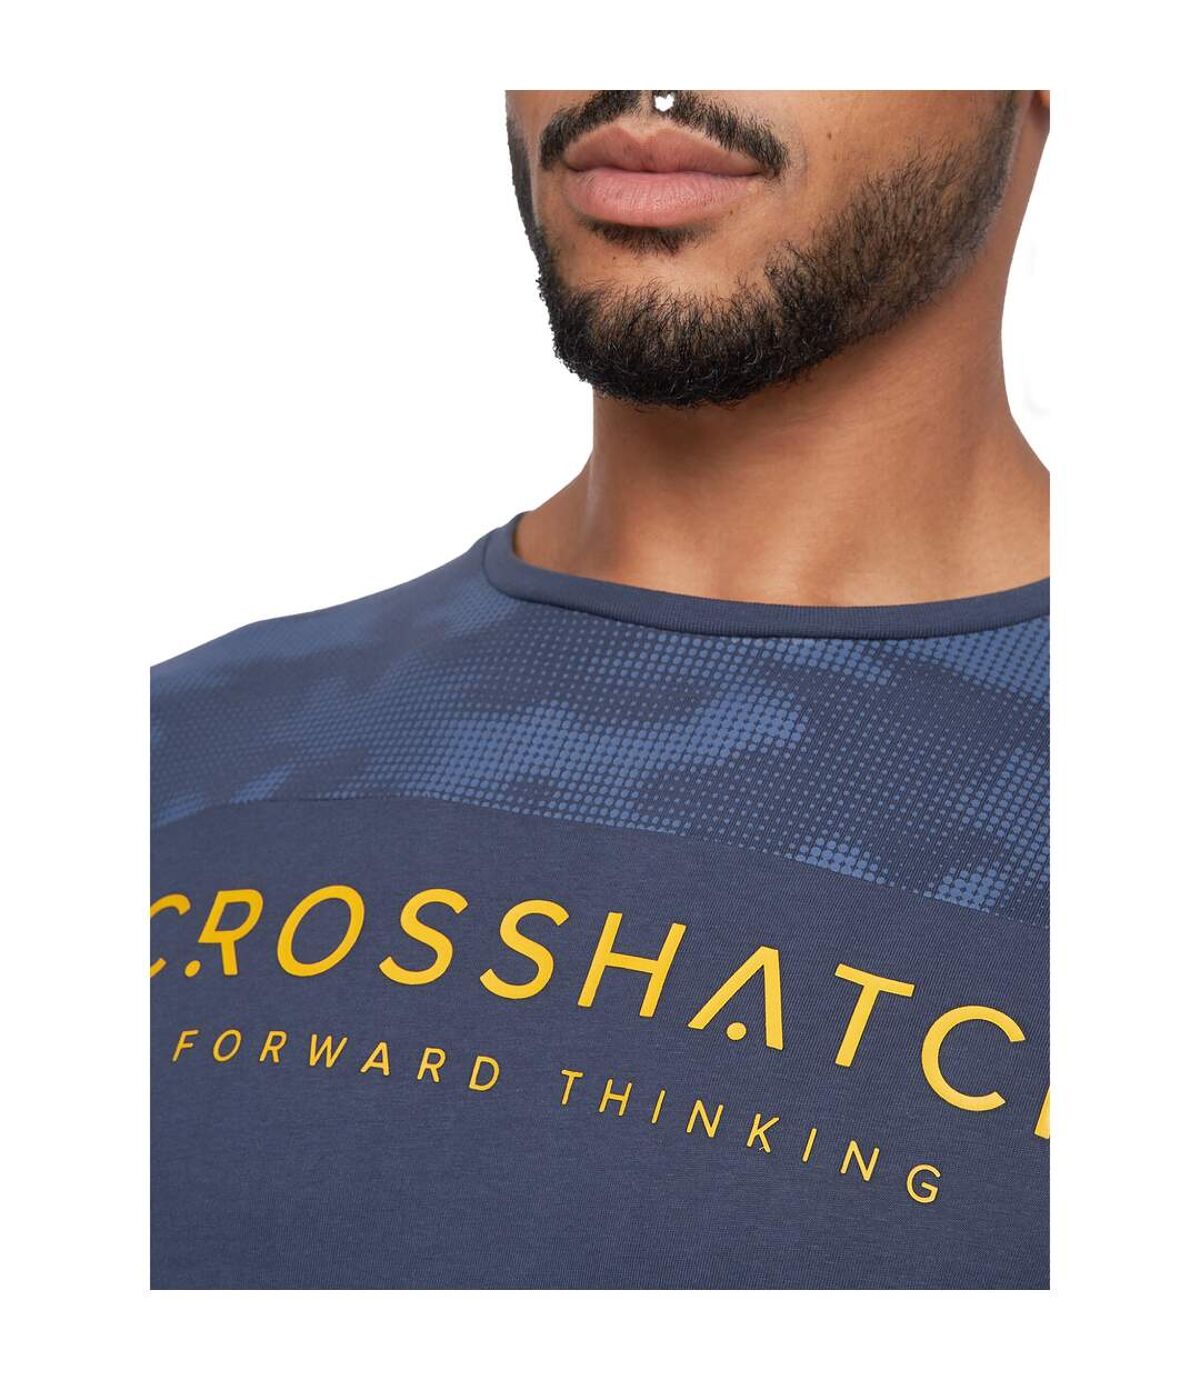 Crosshatch Mens Chemmy Camo T-Shirt (Navy)